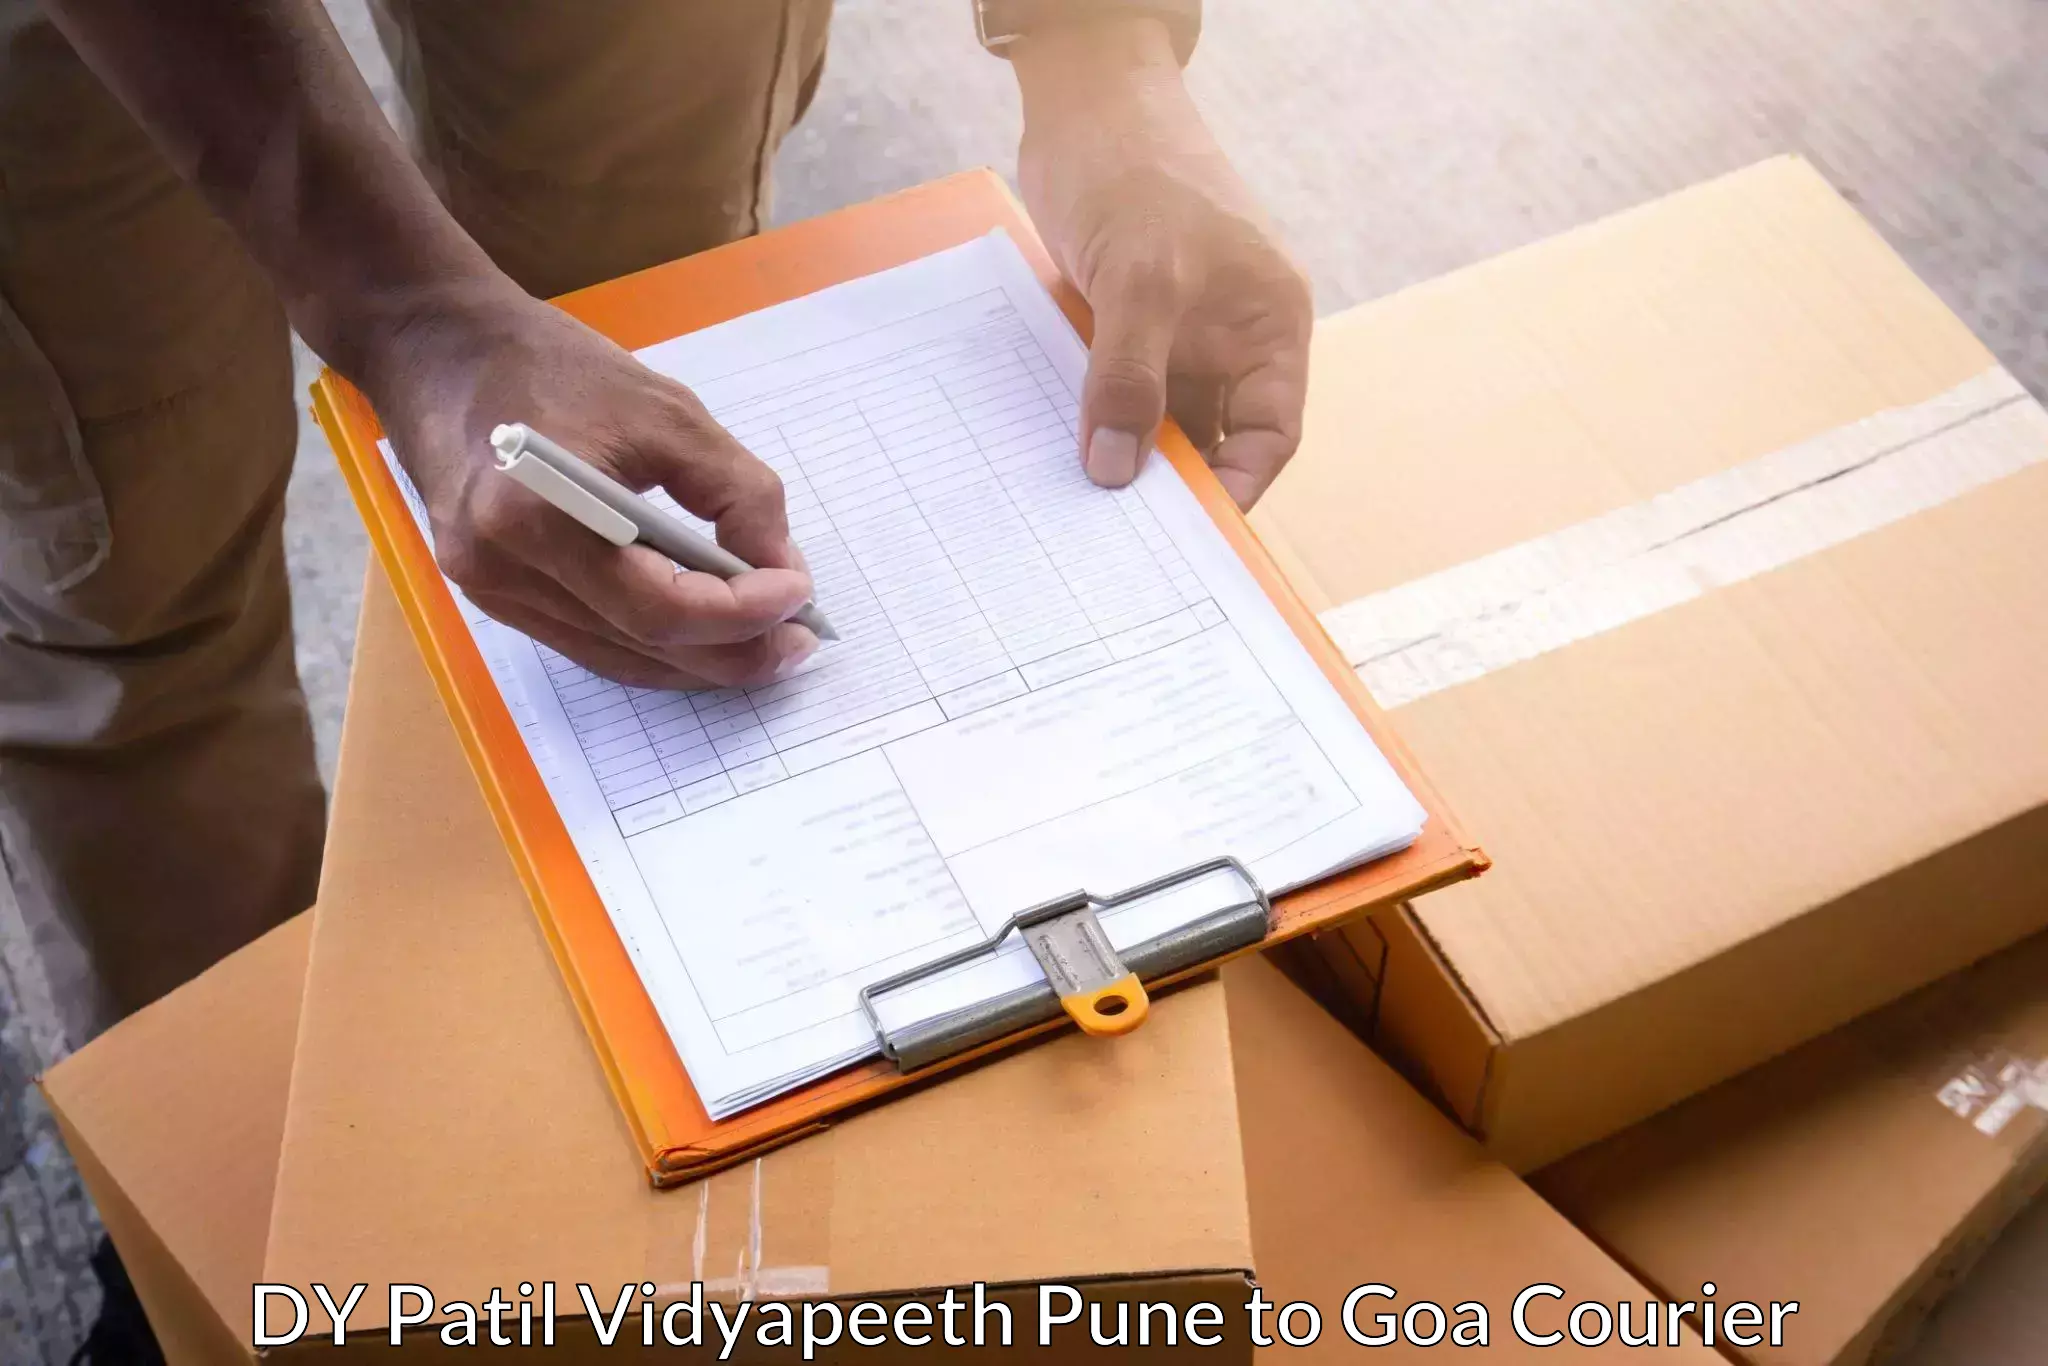 Individual parcel service DY Patil Vidyapeeth Pune to Goa